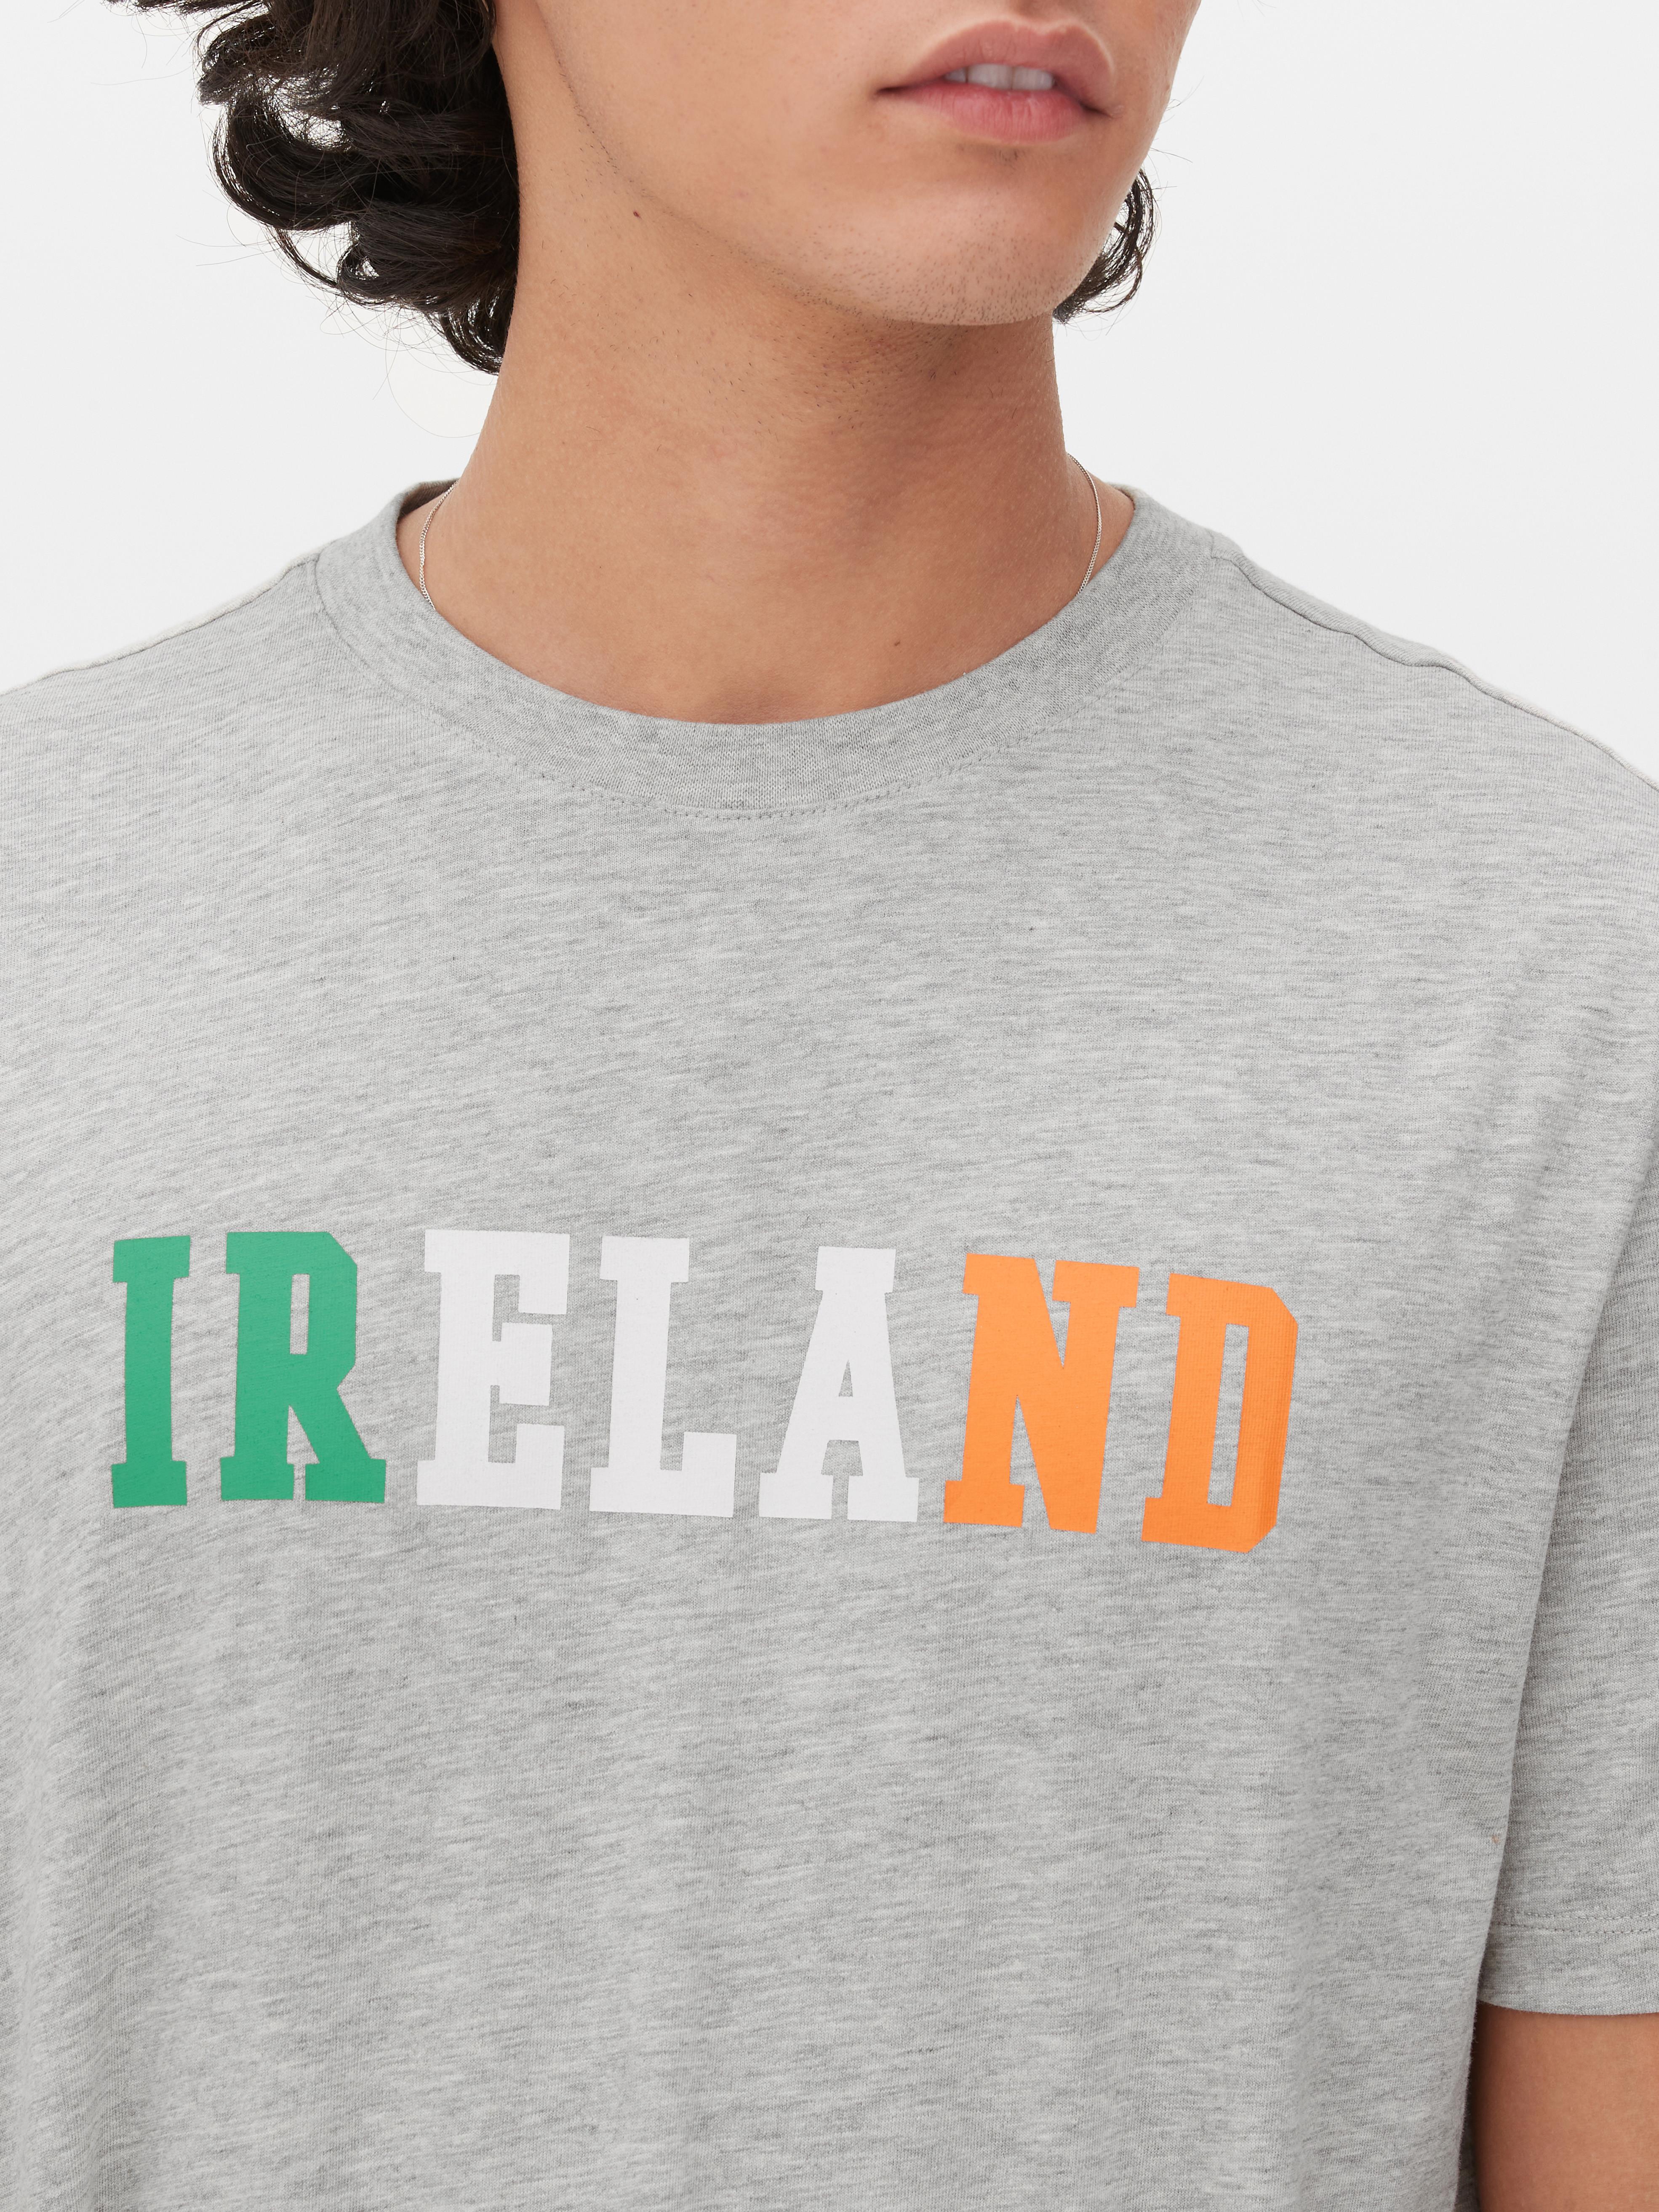 Ireland Short Sleeve T-shirt